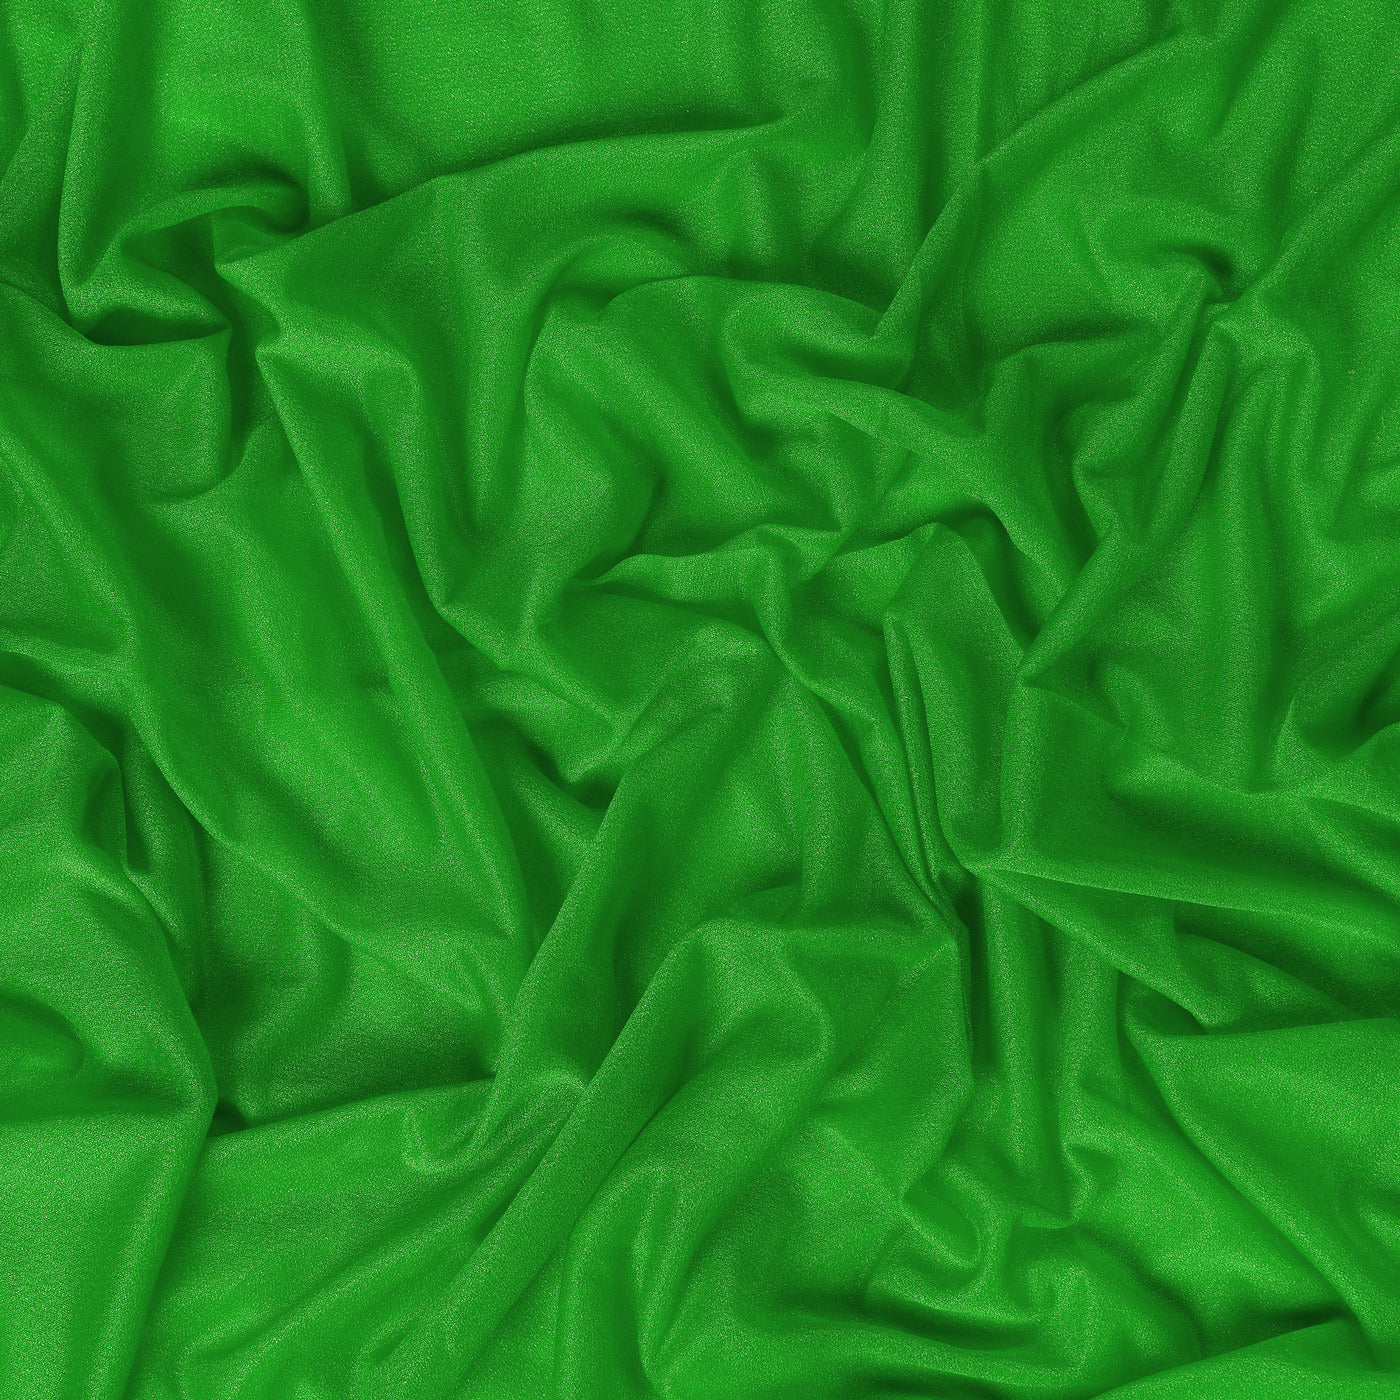 Green,e46ef3bc-8013-42ee-8474-b4ce43903809